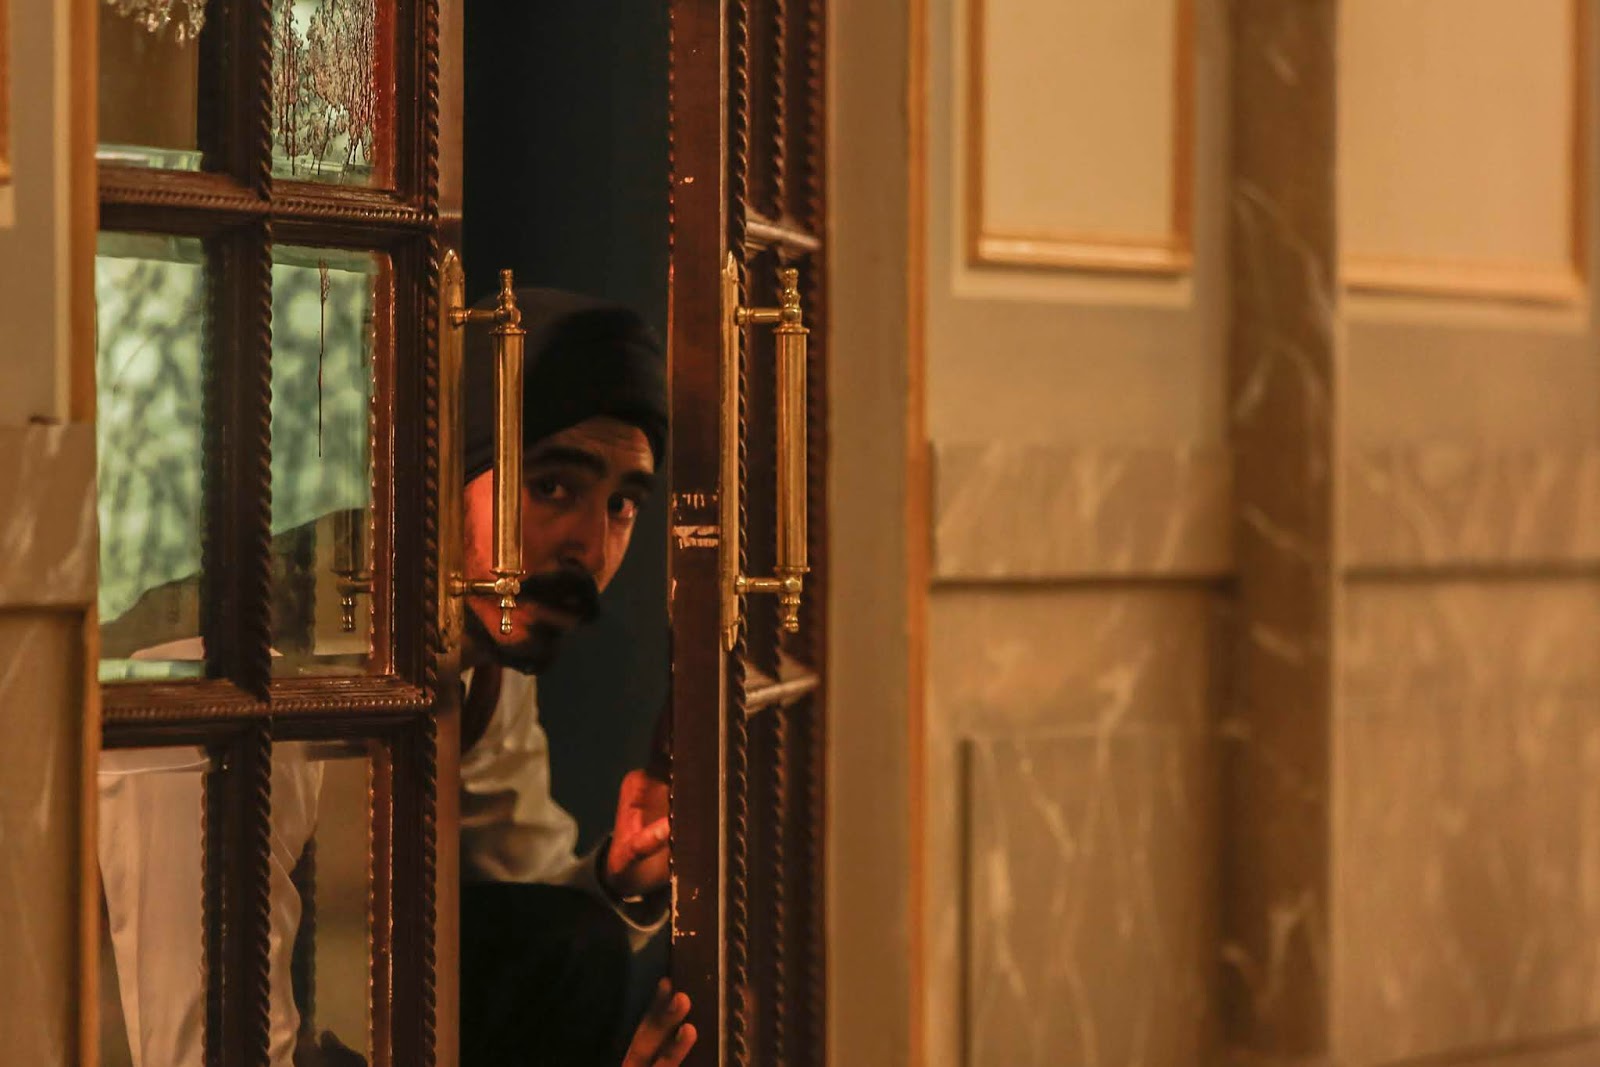 Отель мумбаи похожие. АРМИ Хаммер отель Мумбаи. Джейсон Айзекс отель Мумбаи. Отель Мумбаи Противостояние Имран. «Отель Мумбаи: Противостояние» реж. Энтони Марас, 2018.